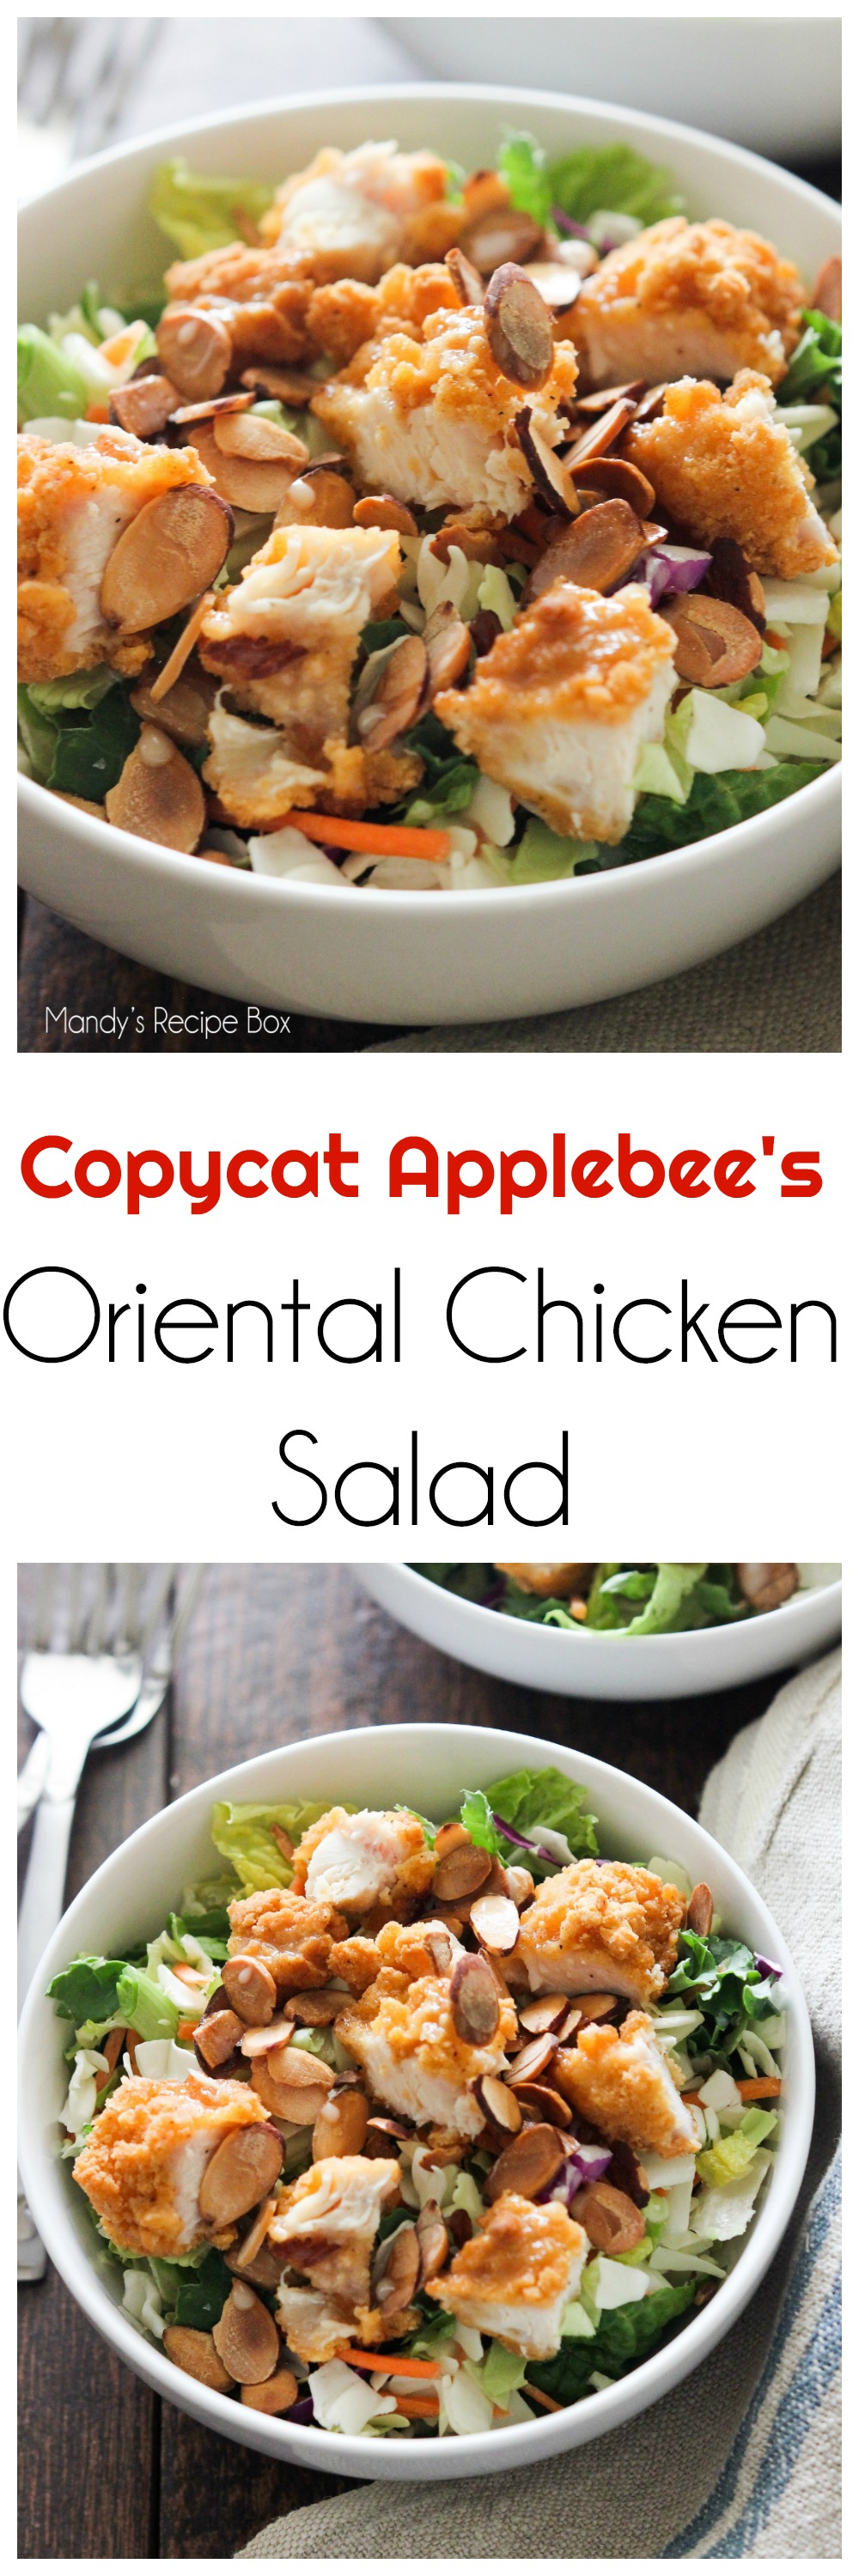 Applebee's Oriental Chicken Salad | Mandy's Recipe Box